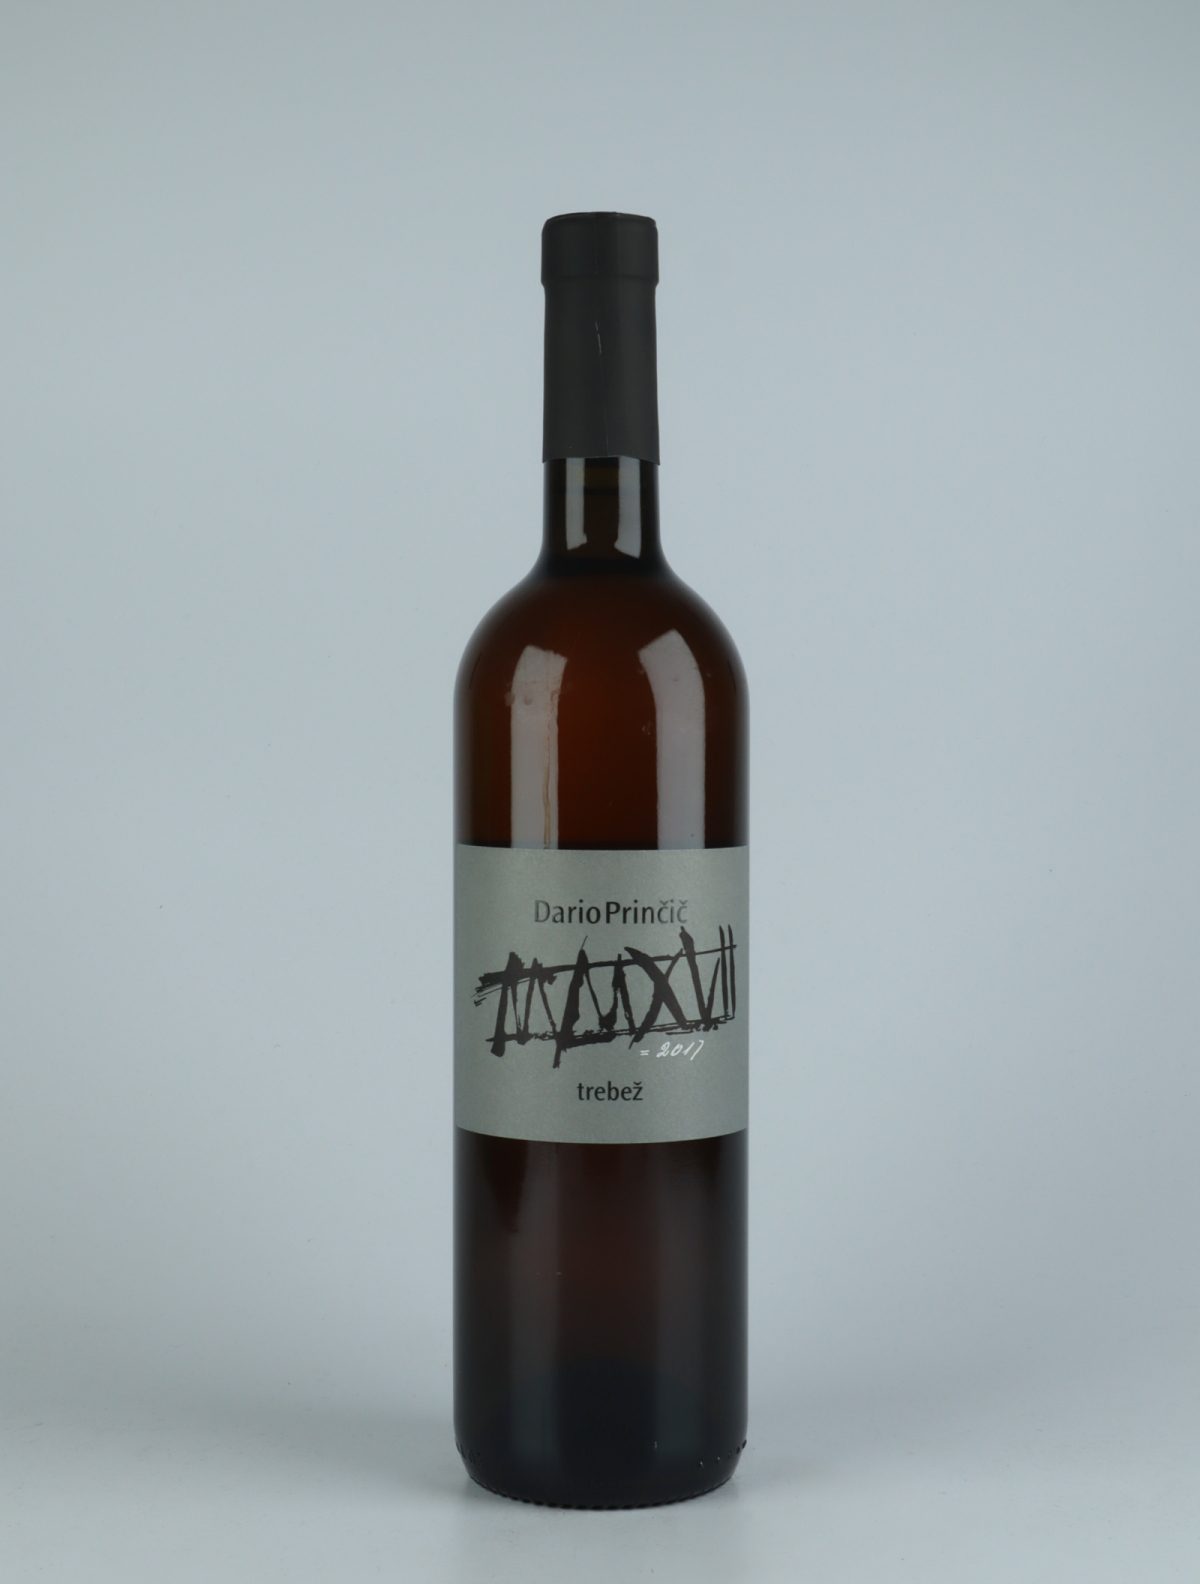 A bottle 2017 Bianco Trebez Orange wine from Dario Princic, Friuli in Italy